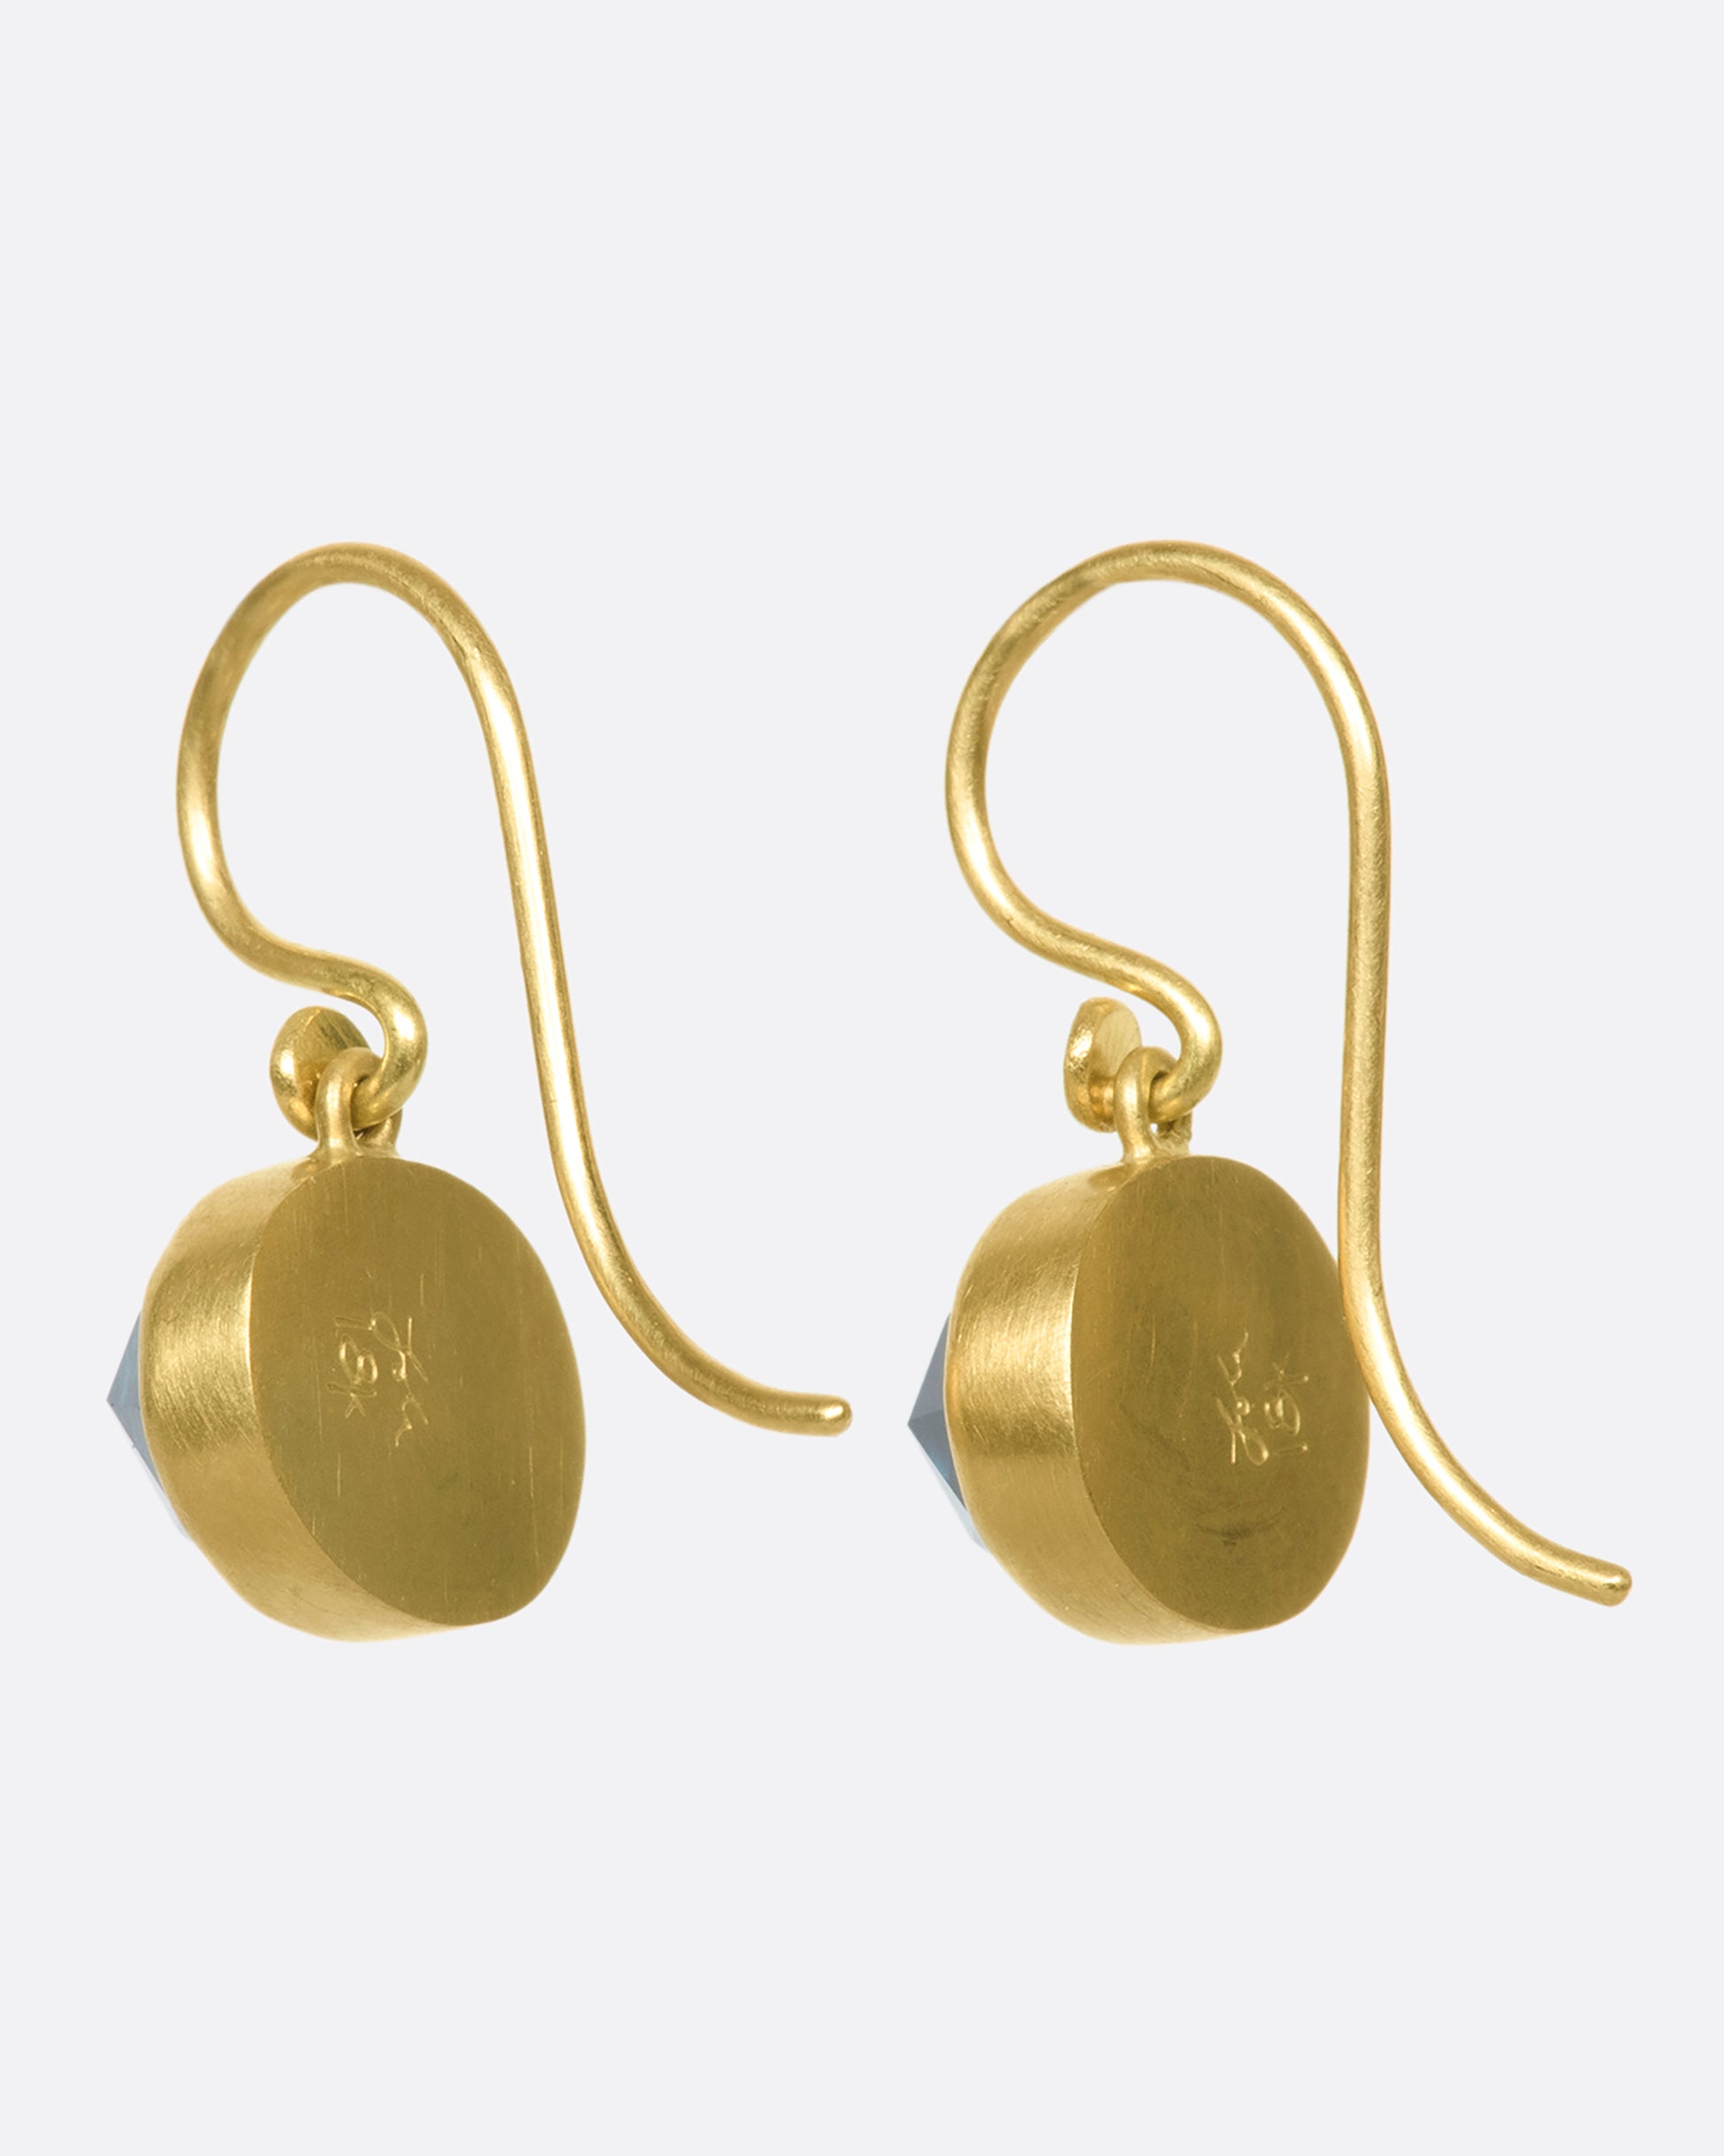 18k gold dangling earrings with oval London blue topaz drops. The rich blue topaz looks like sunlit water wrapped in a gold bezel setting.